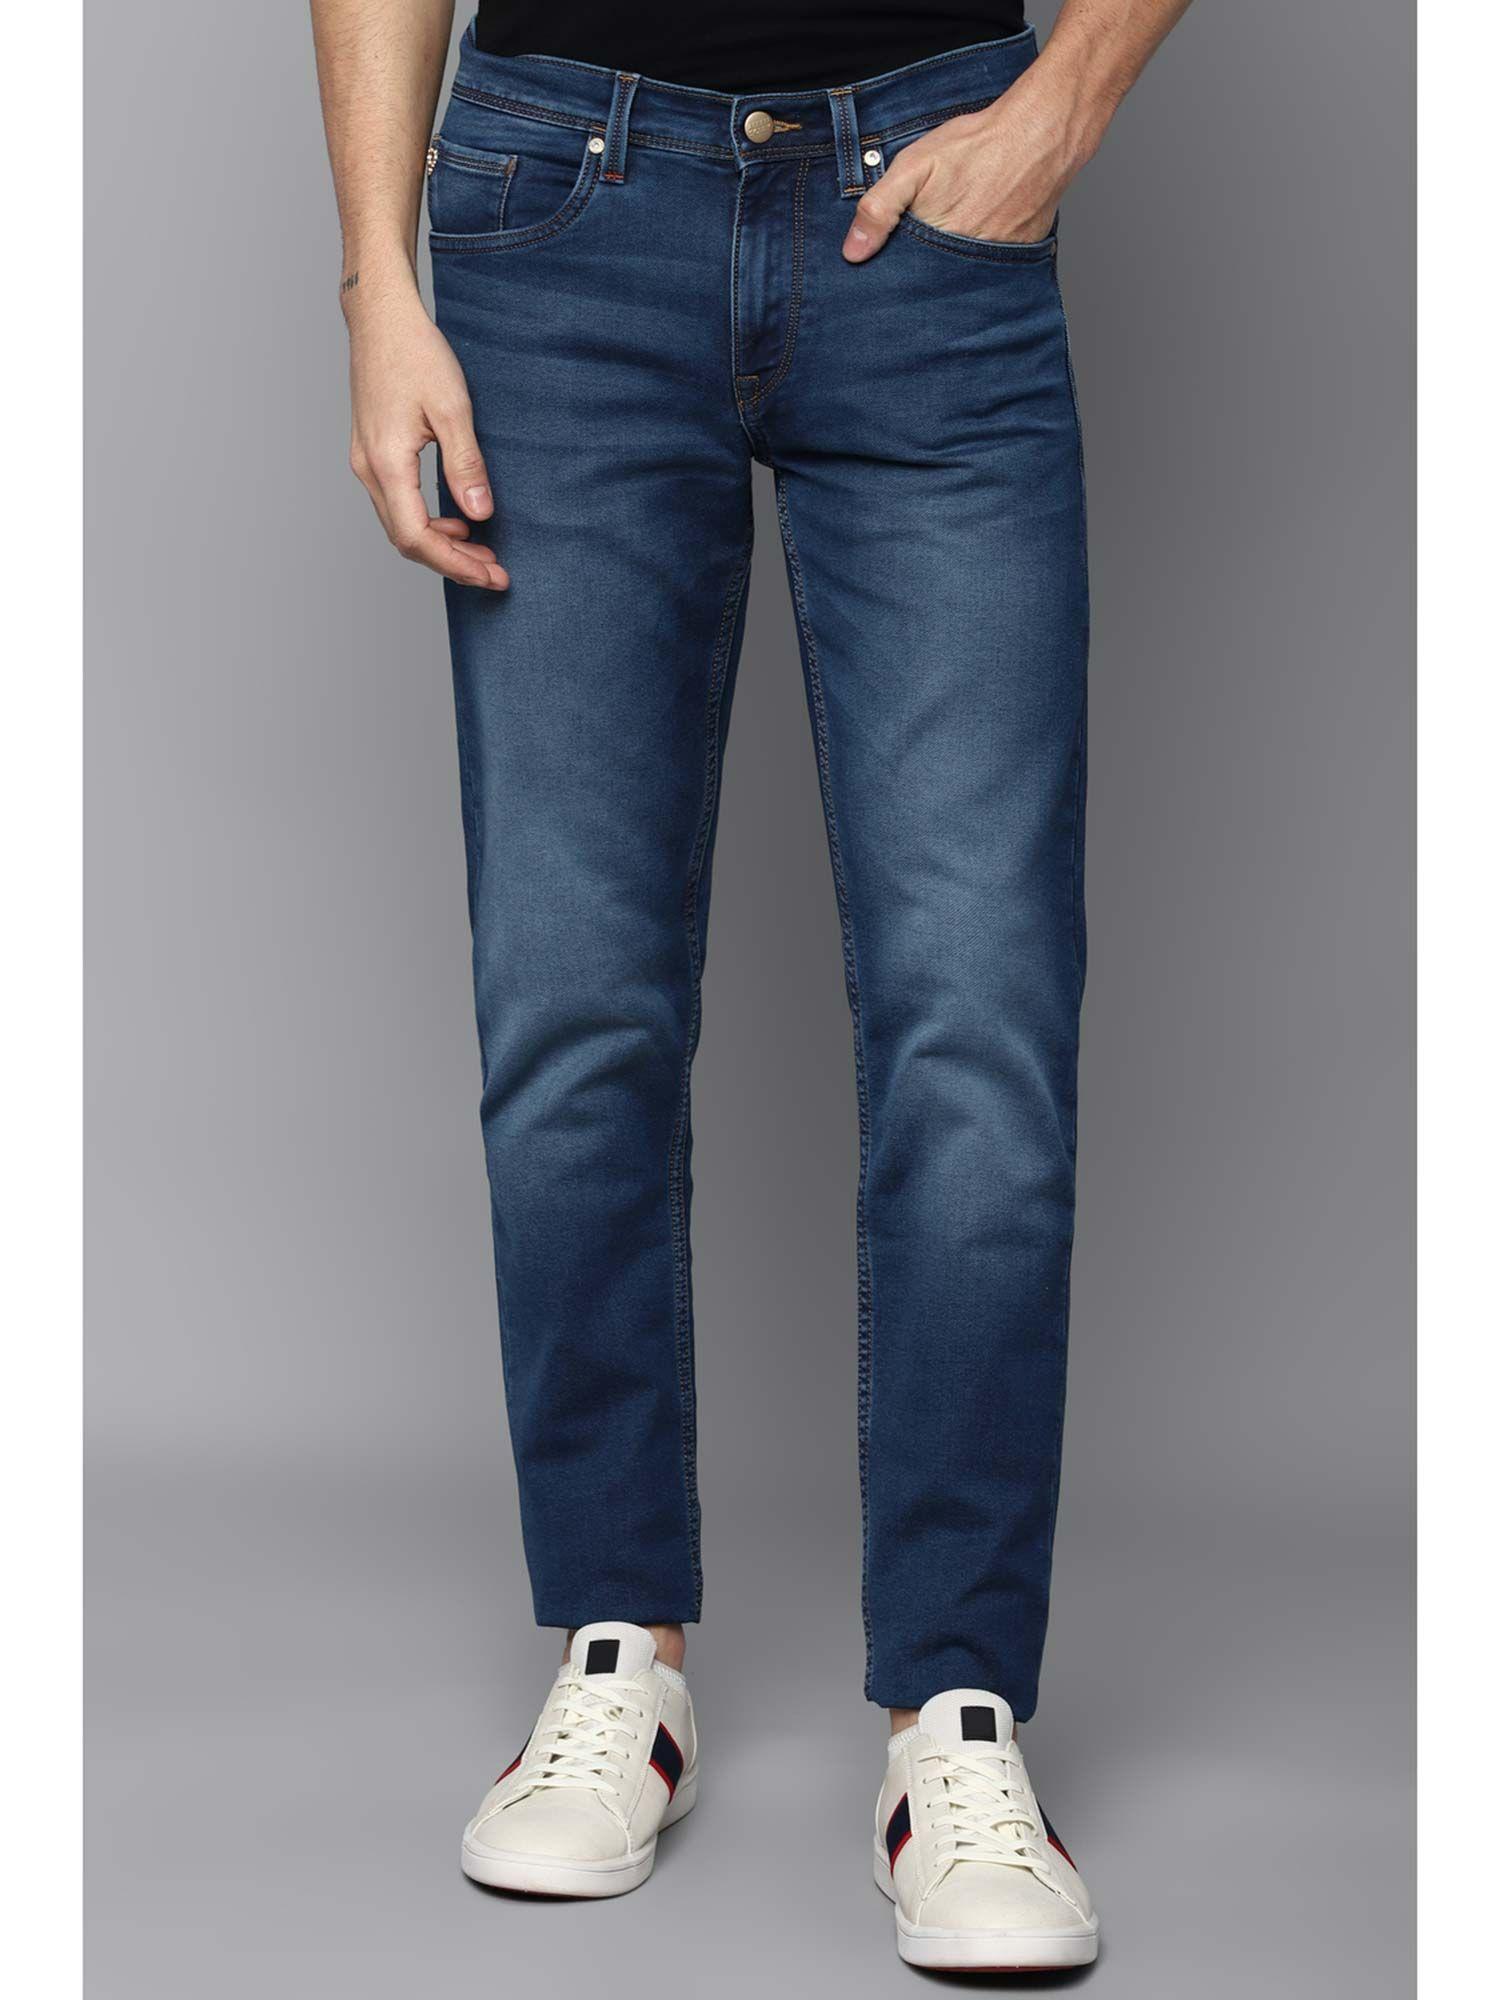 navy-blue-jeans